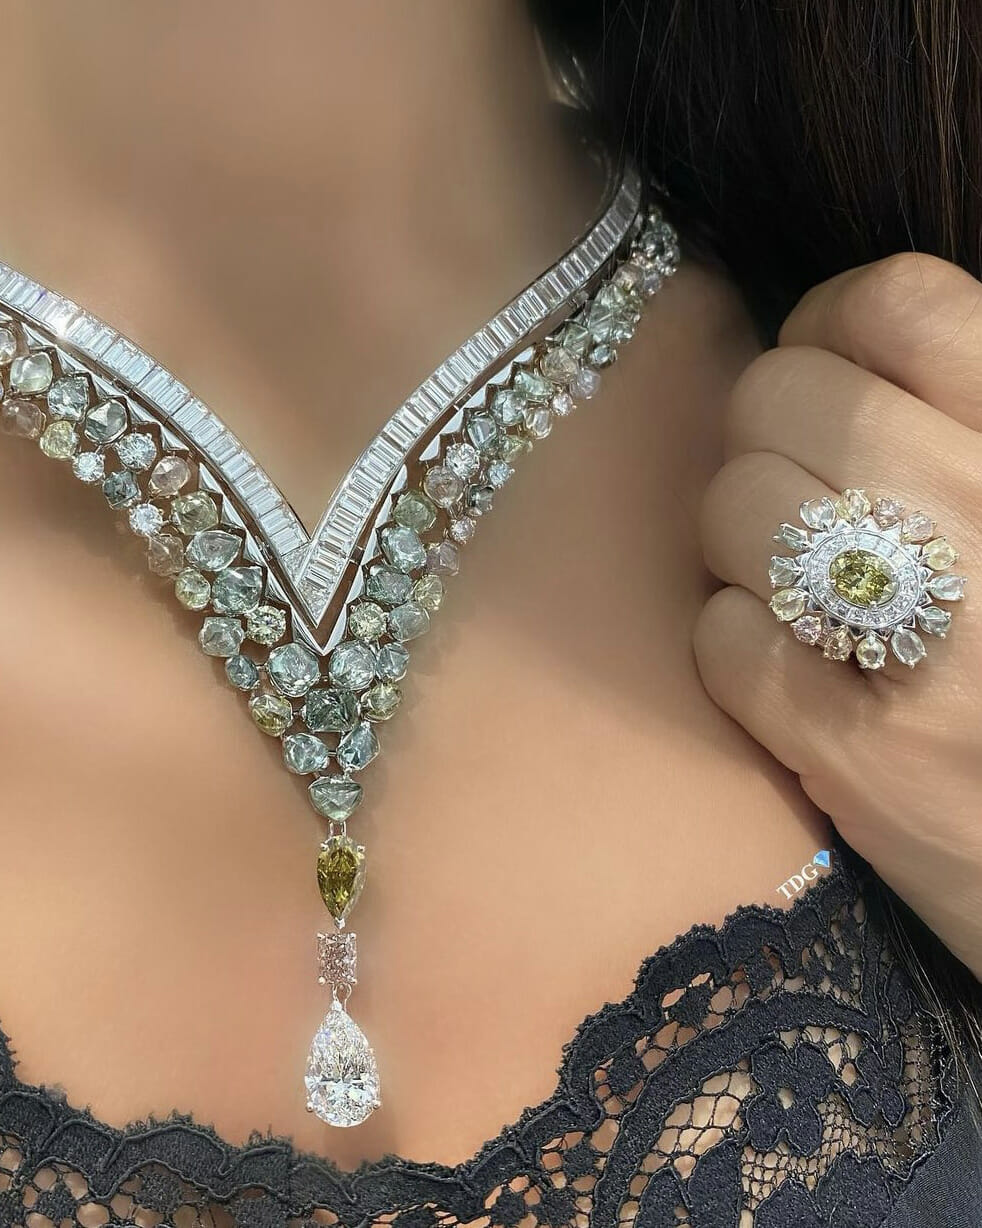 The Diamonds Girl Tracy Ellison wearing a De Beers Knysna Chameleon Necklace diamond necklace